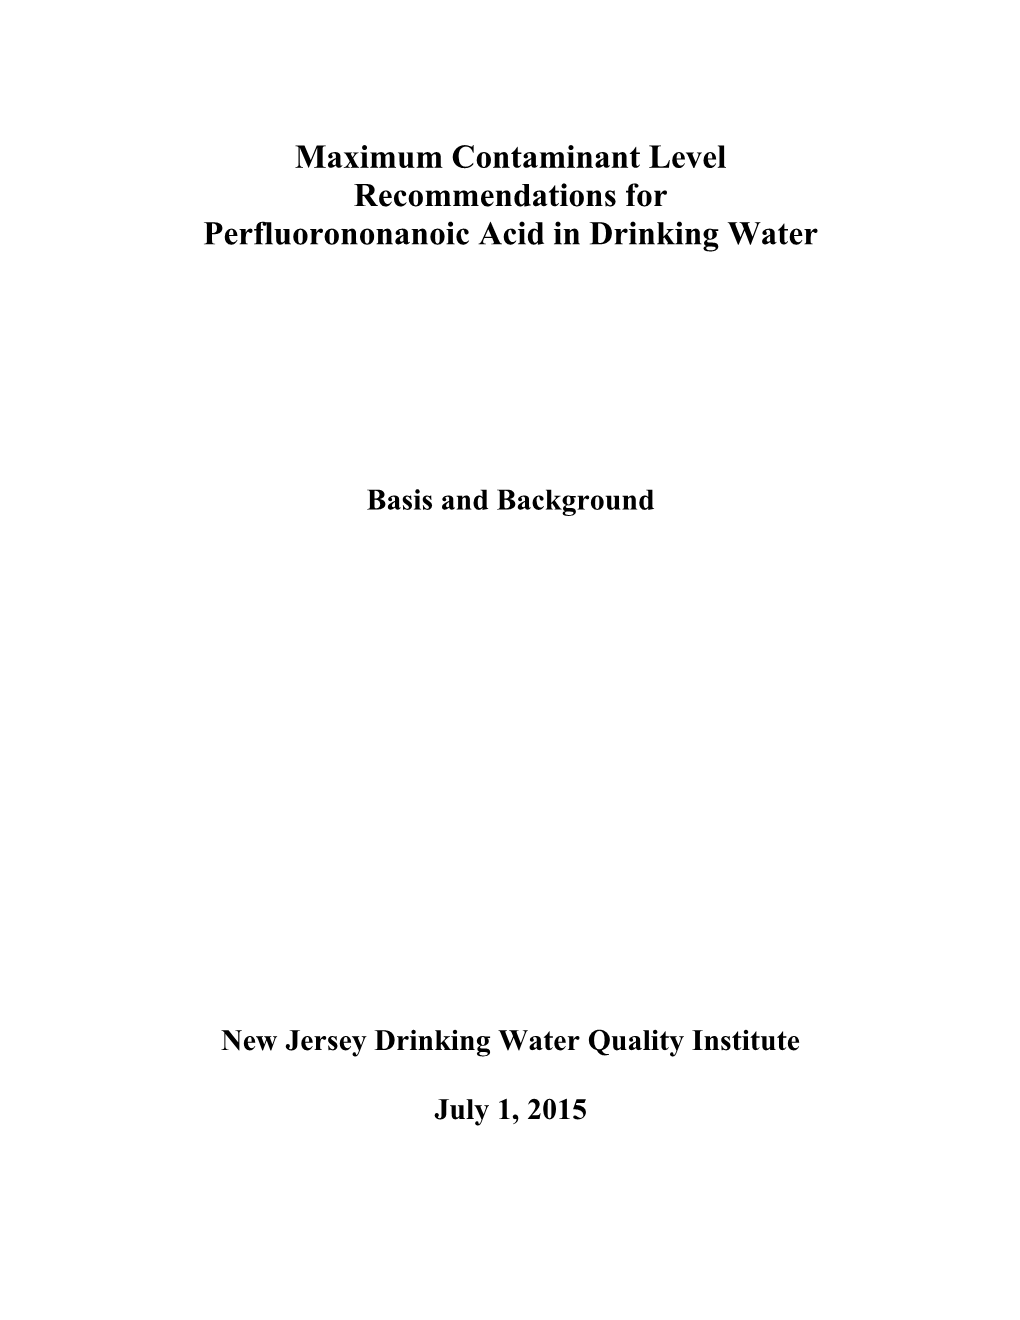 Maximum Contaminant Level Recommendations for Perfluorononanoic Acid in Drinking Water